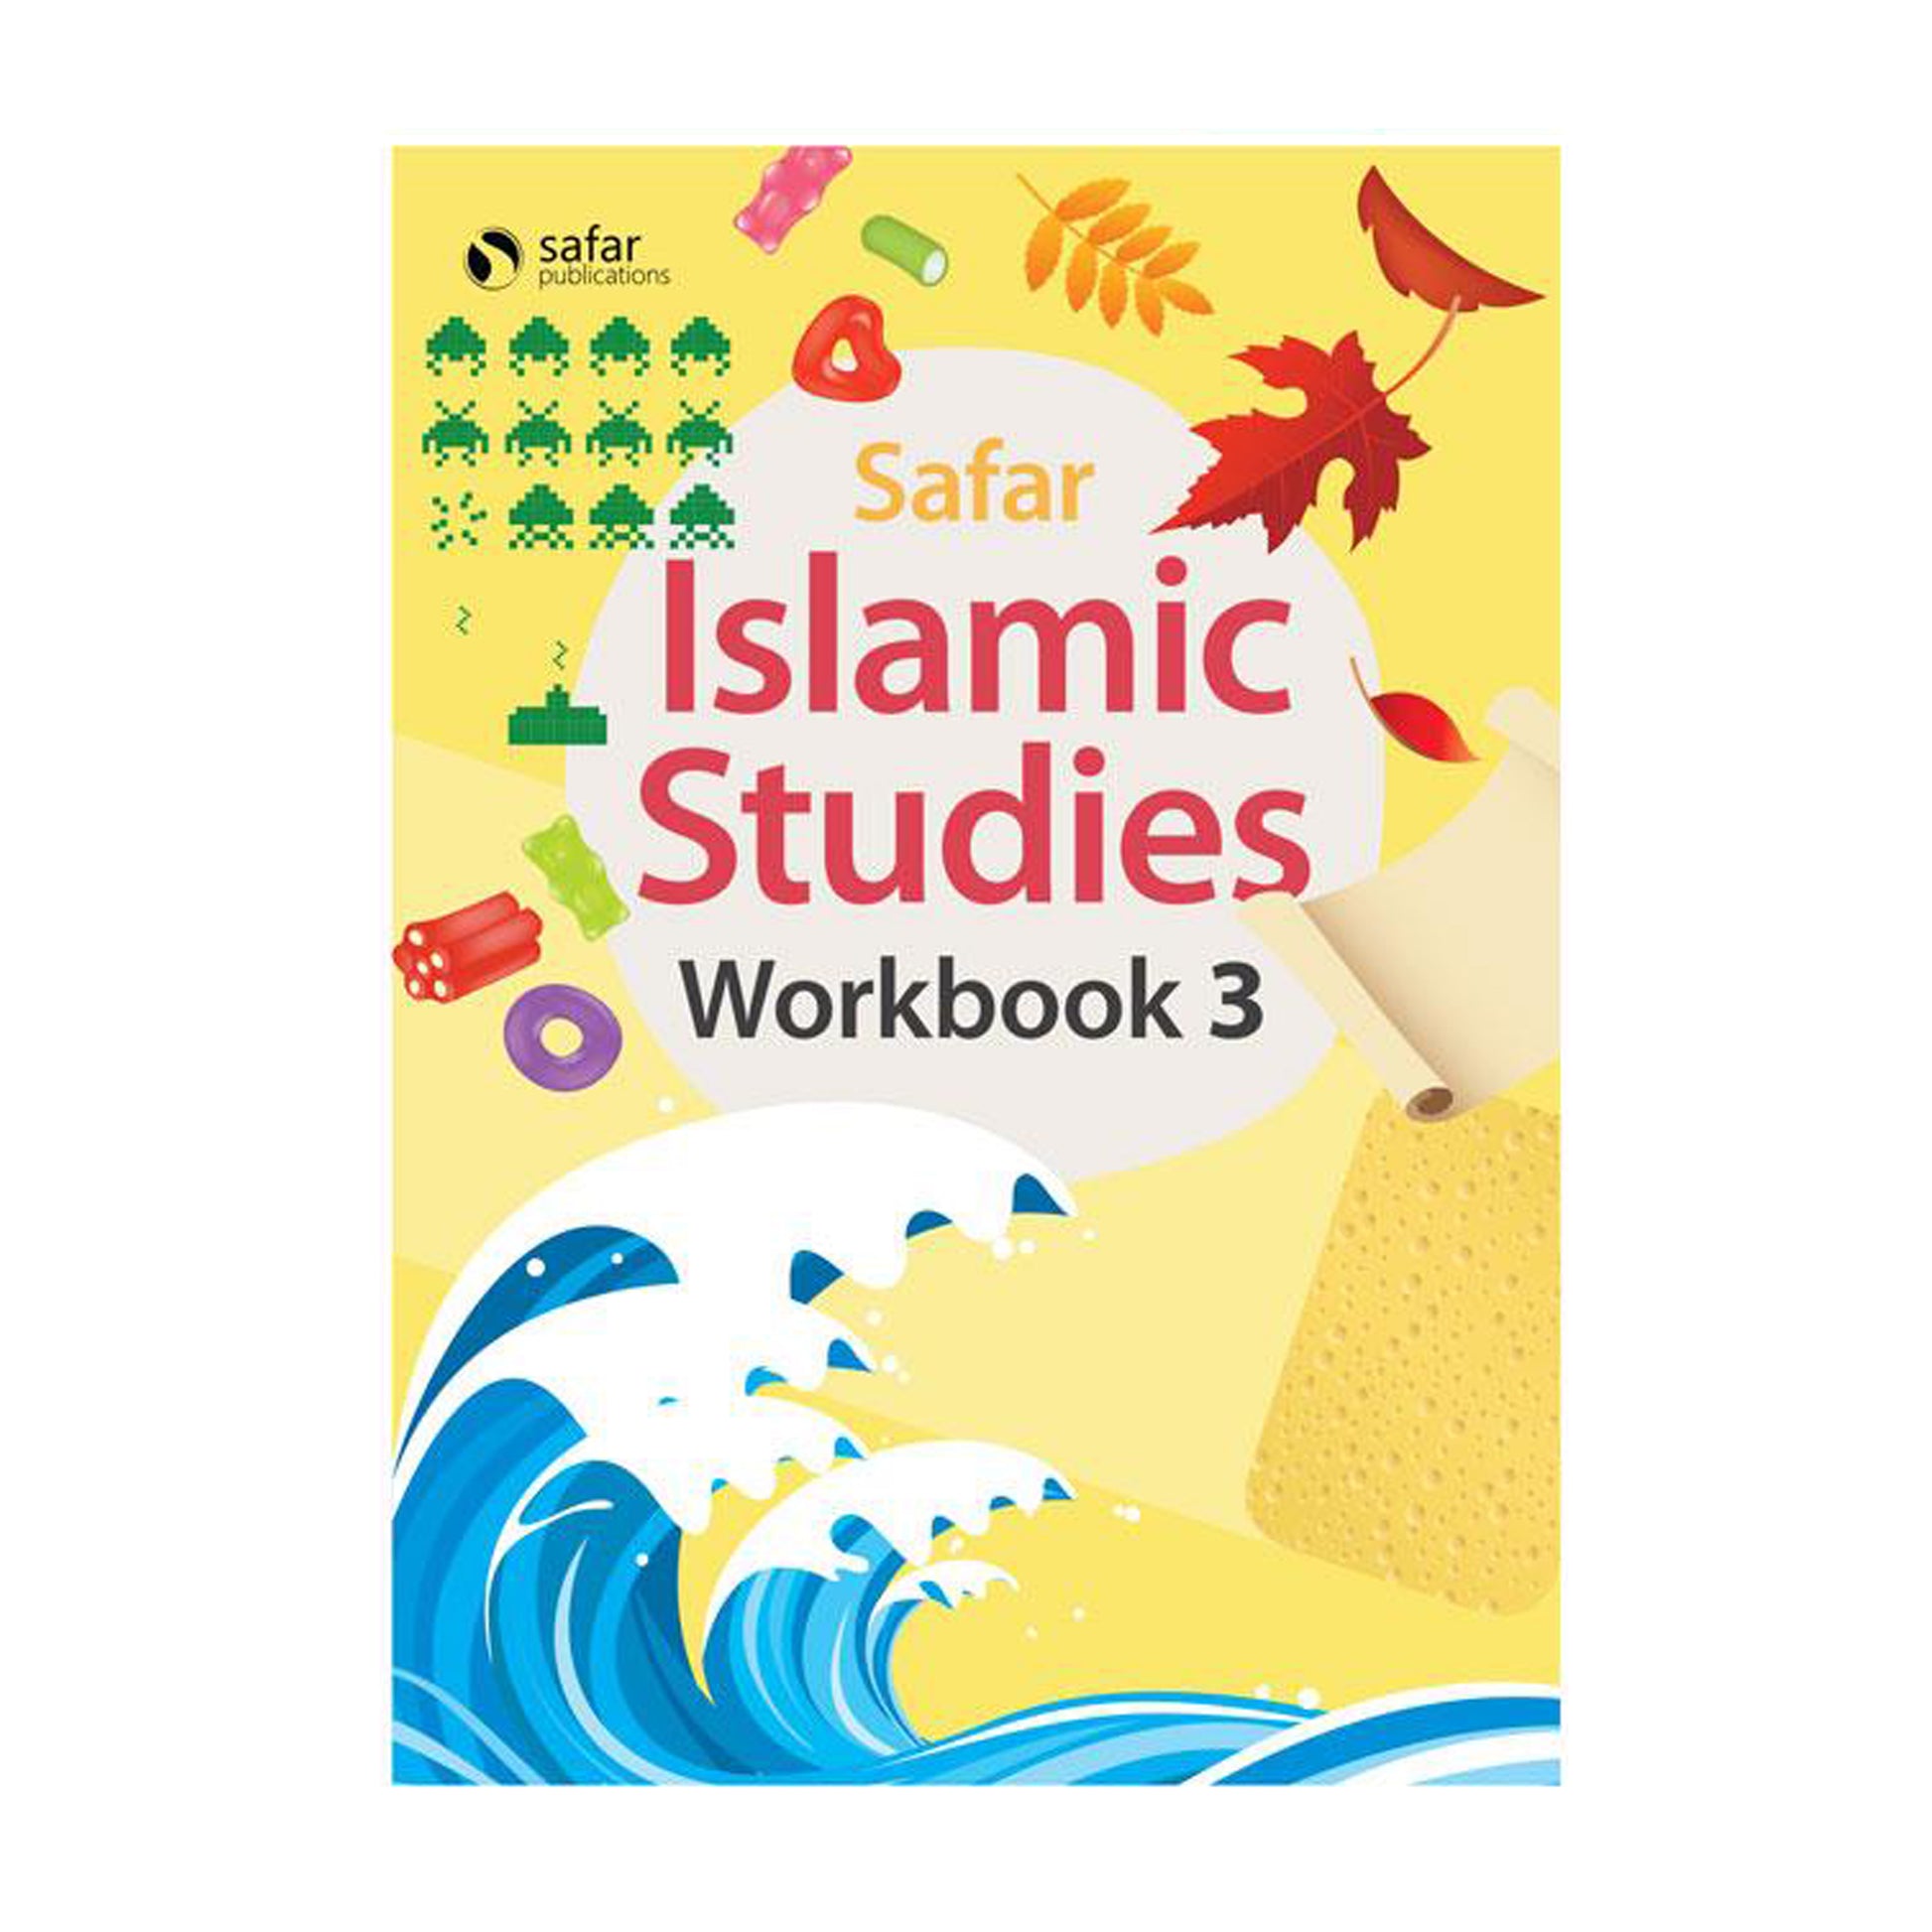 Islamic Studies Workbook 3